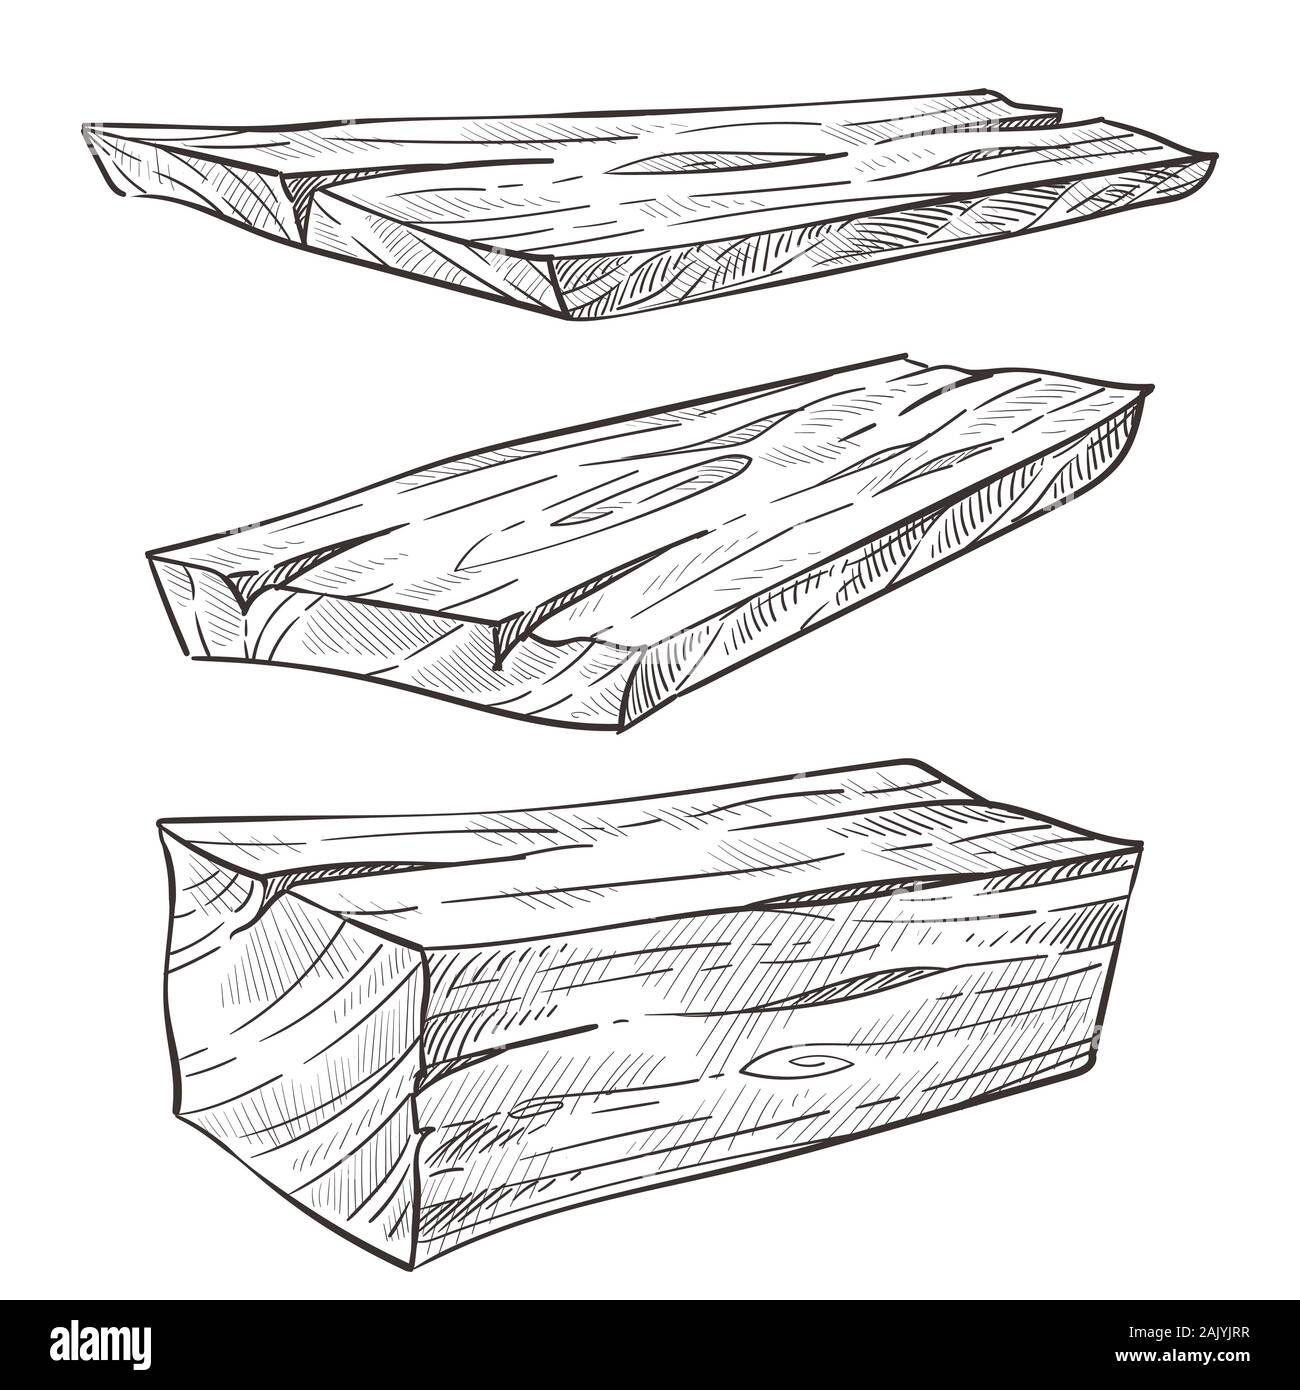 Set Wooden Board Vector Illustration Stock Vector Royalty Free 296670869   Shutterstock